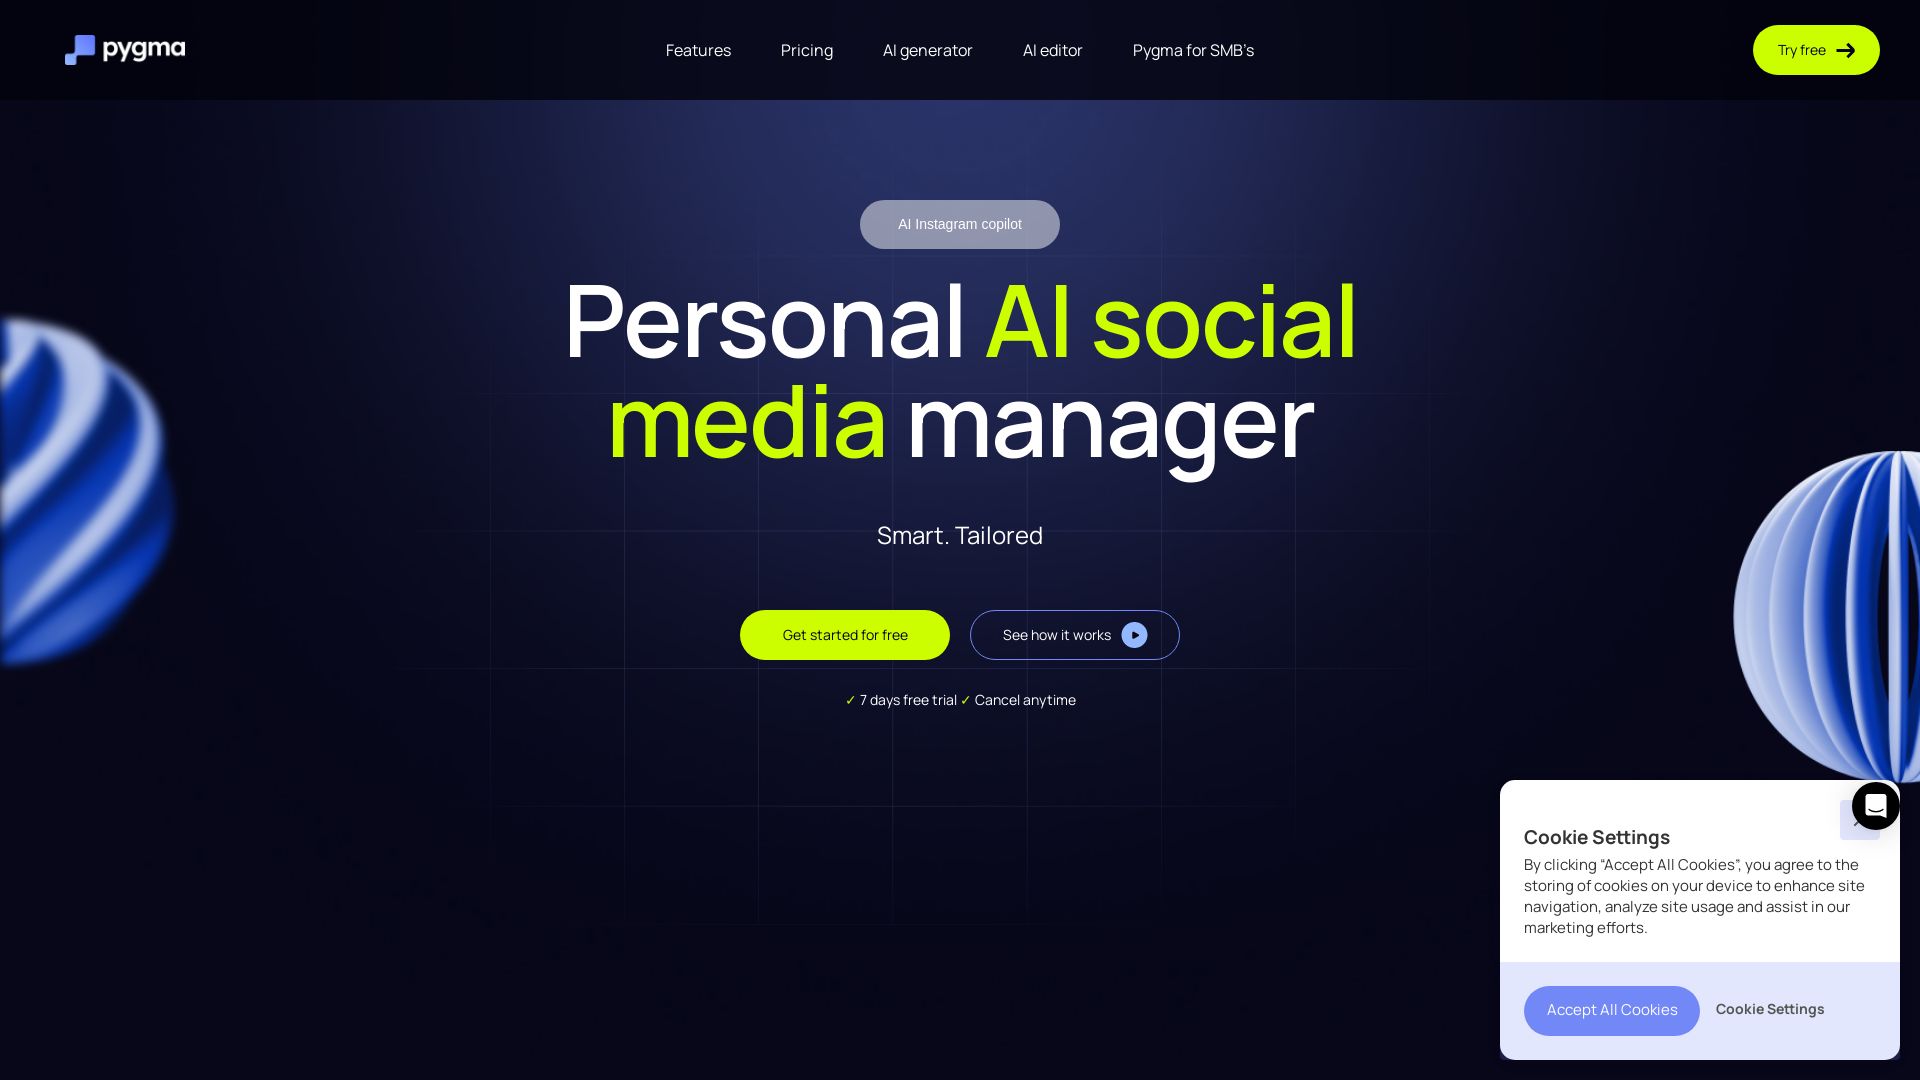 Pygma – Personal AI social media manager